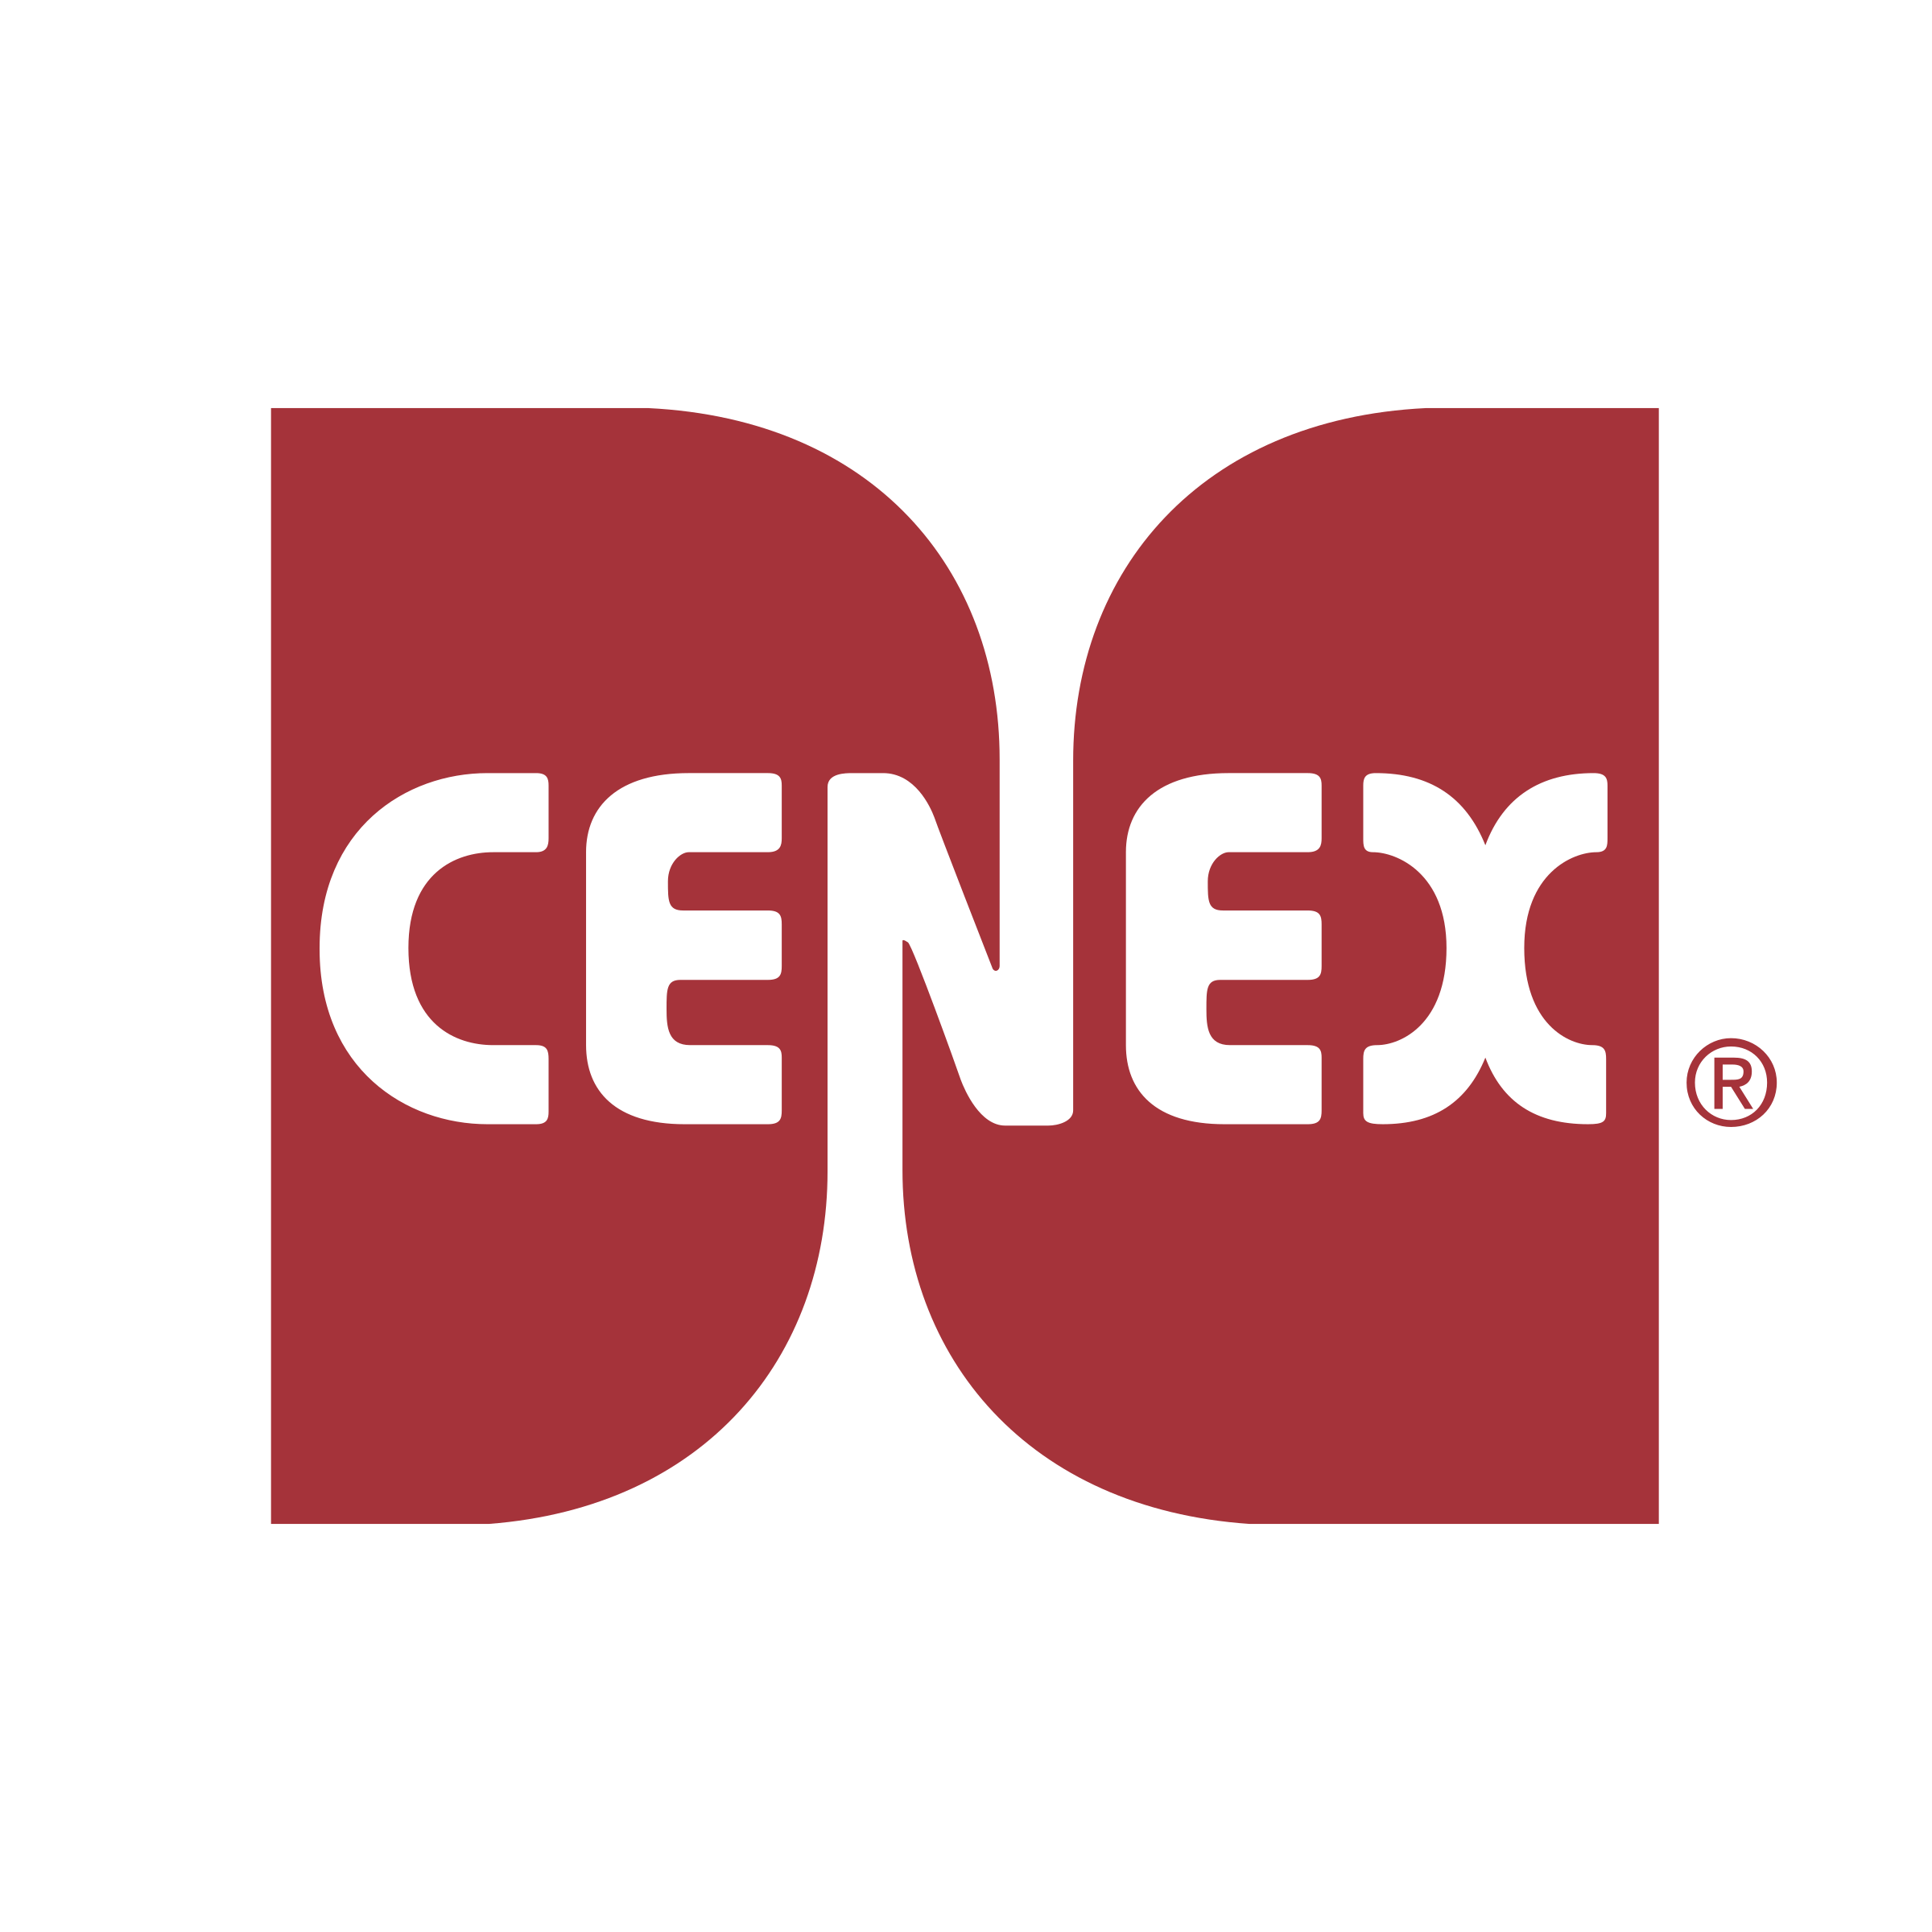 Cenex Logo | Cenex Products Sold & Four Star Supply